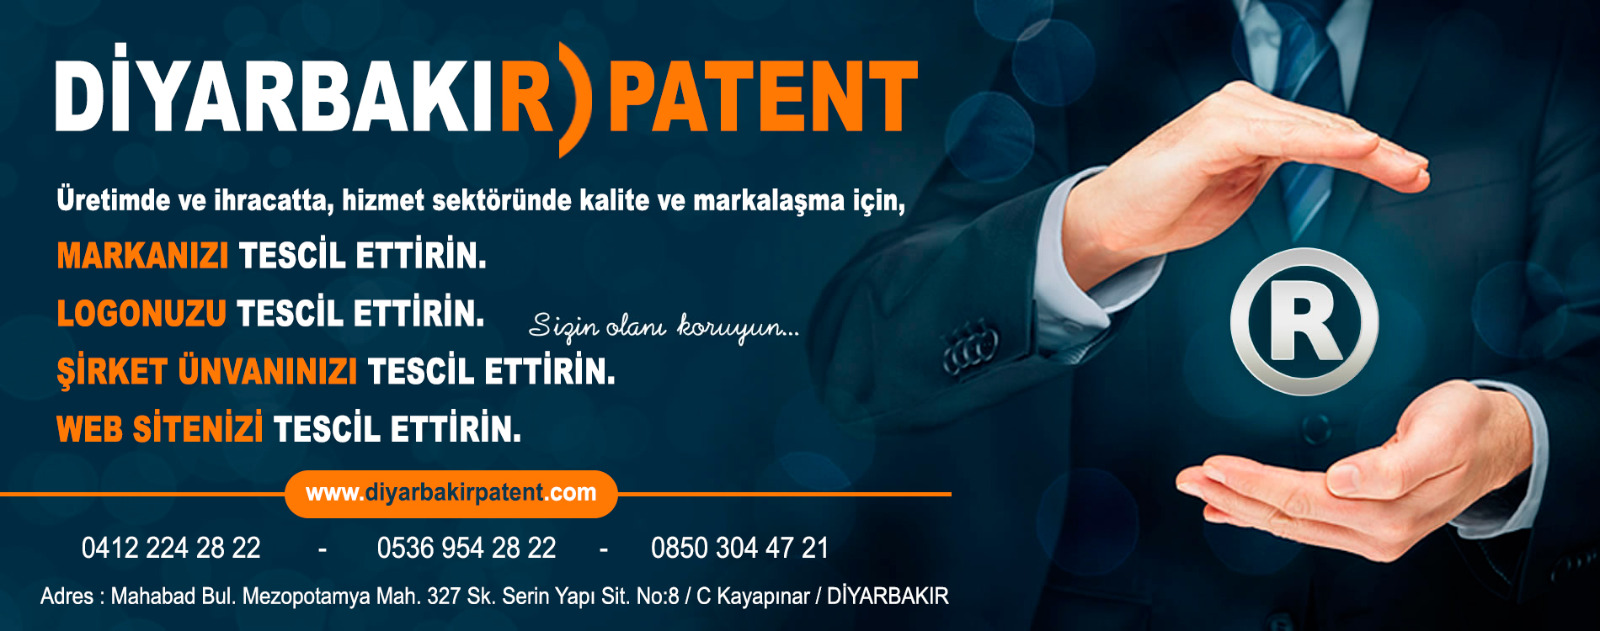 Karlıova Bingöl Marka Patent Firması 0412 224 28 22